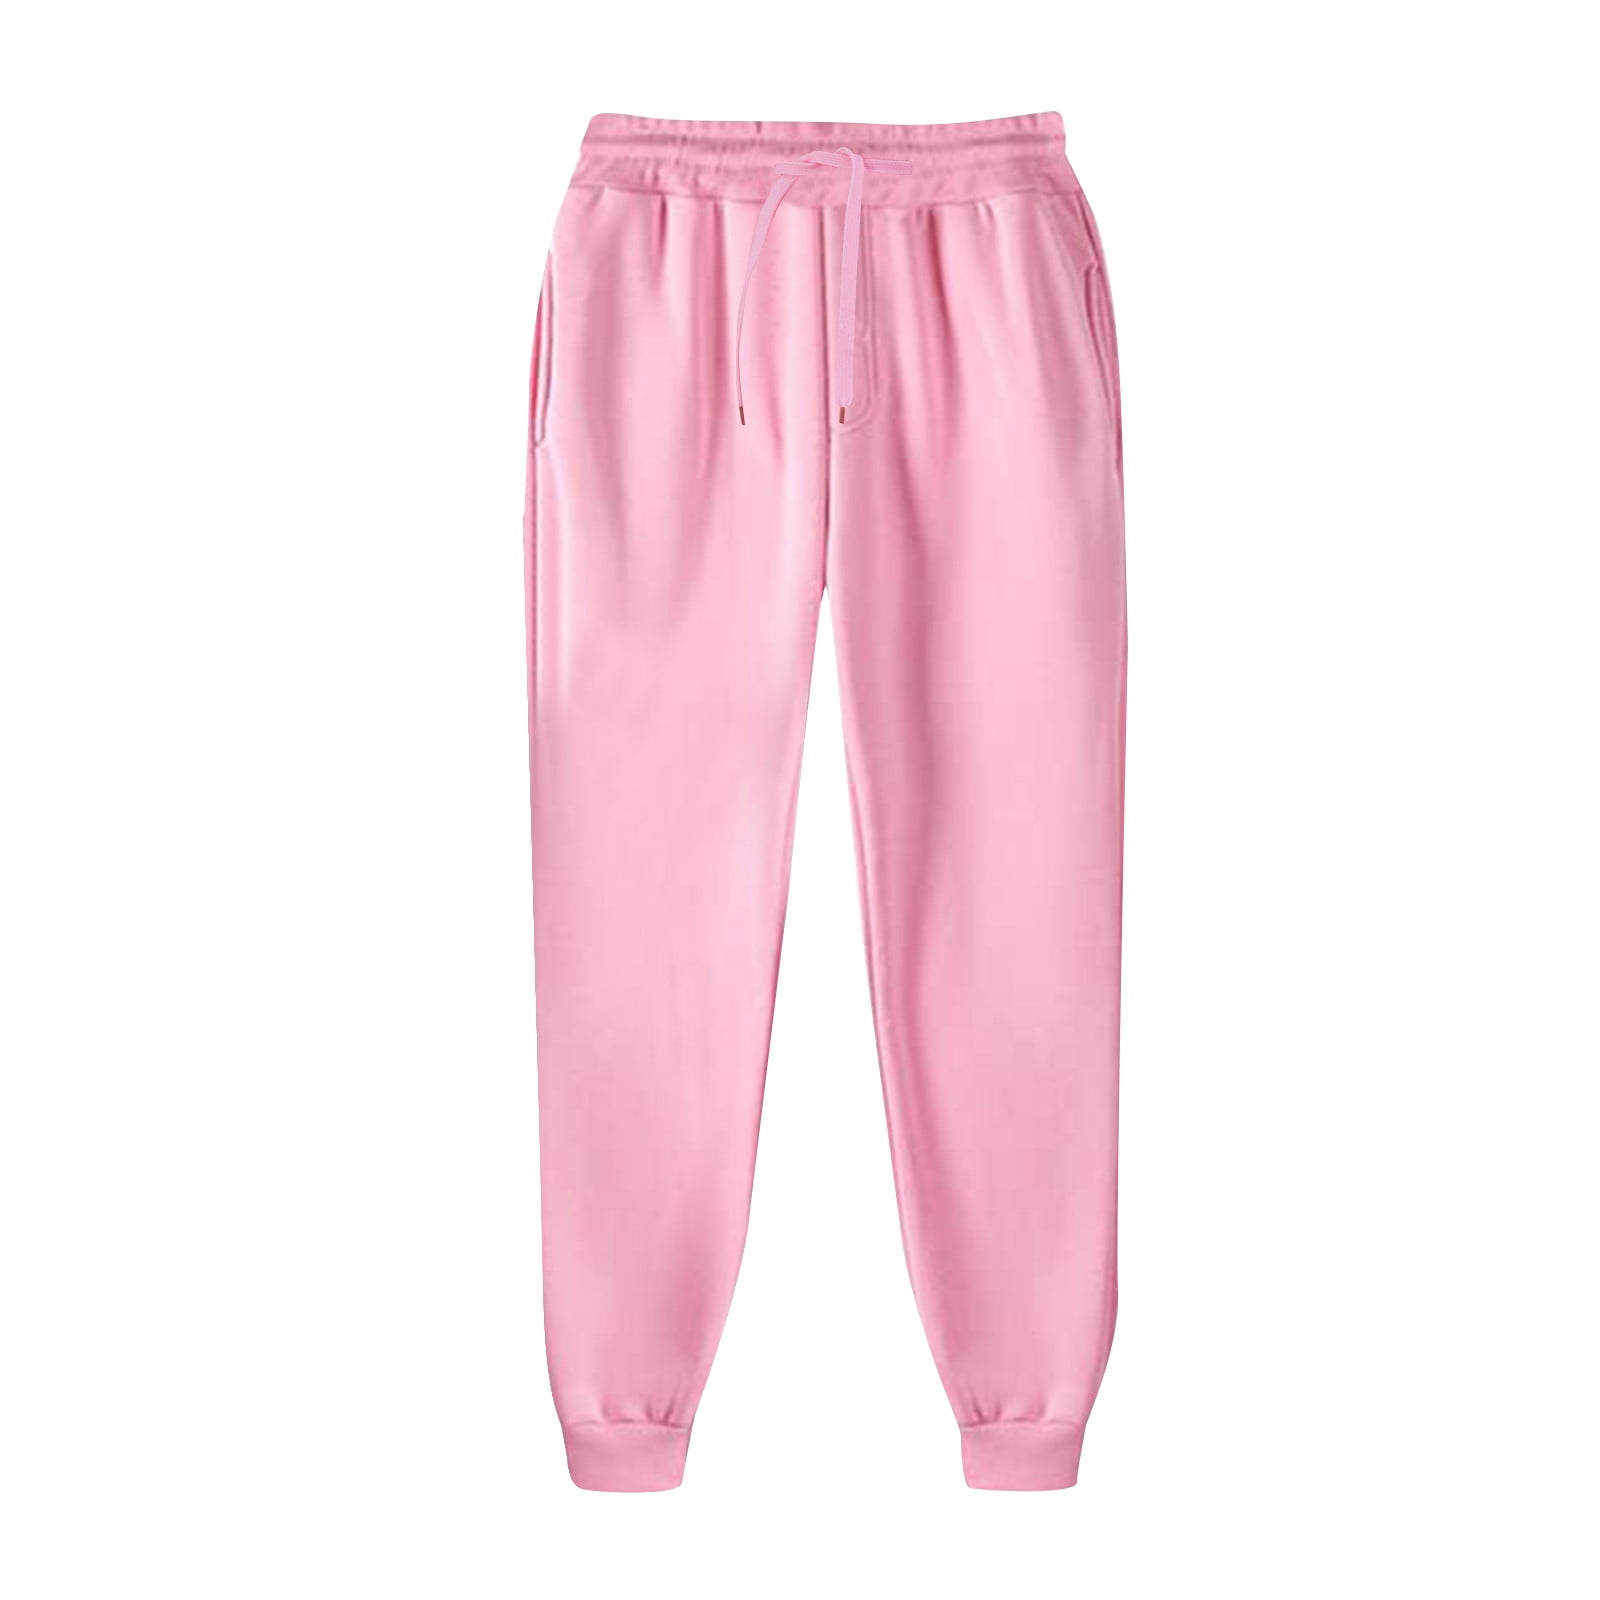 Aayomet Summer Pants Women Womens Casual Solid Color Loose Pockets Elastic  Waist Pants Long Petite Pants for Women Casual,Pink XXL - Walmart.com